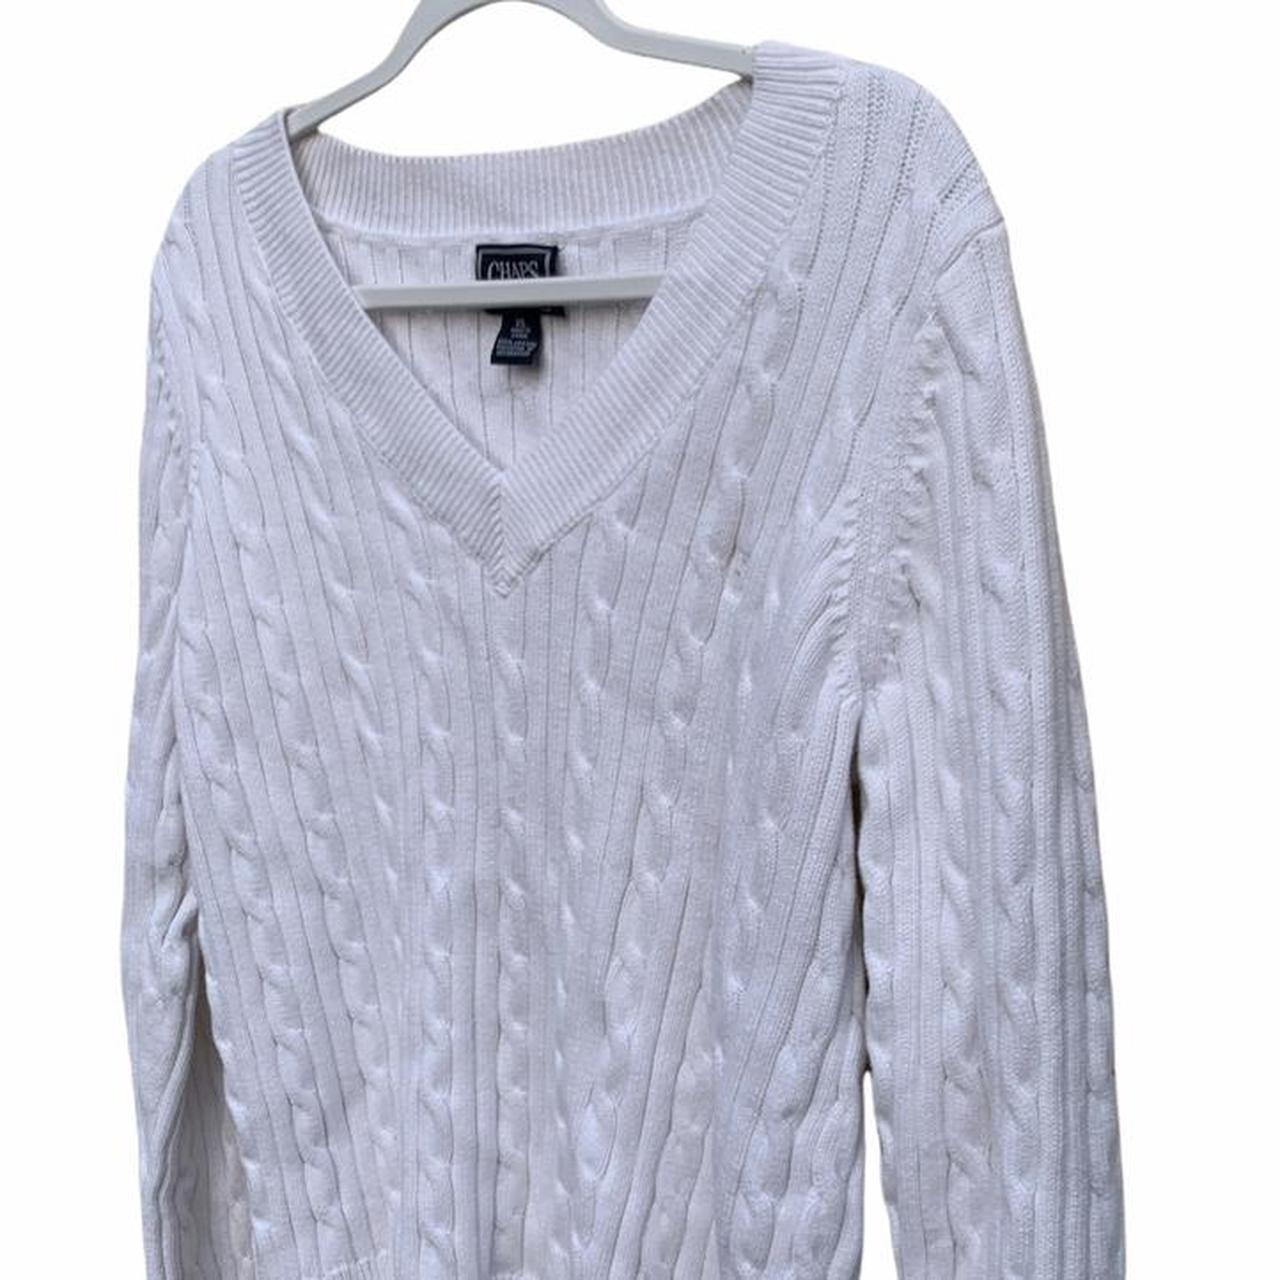 White Cable Knit Jumper Sweater V-Neck Long-sleeved... - Depop